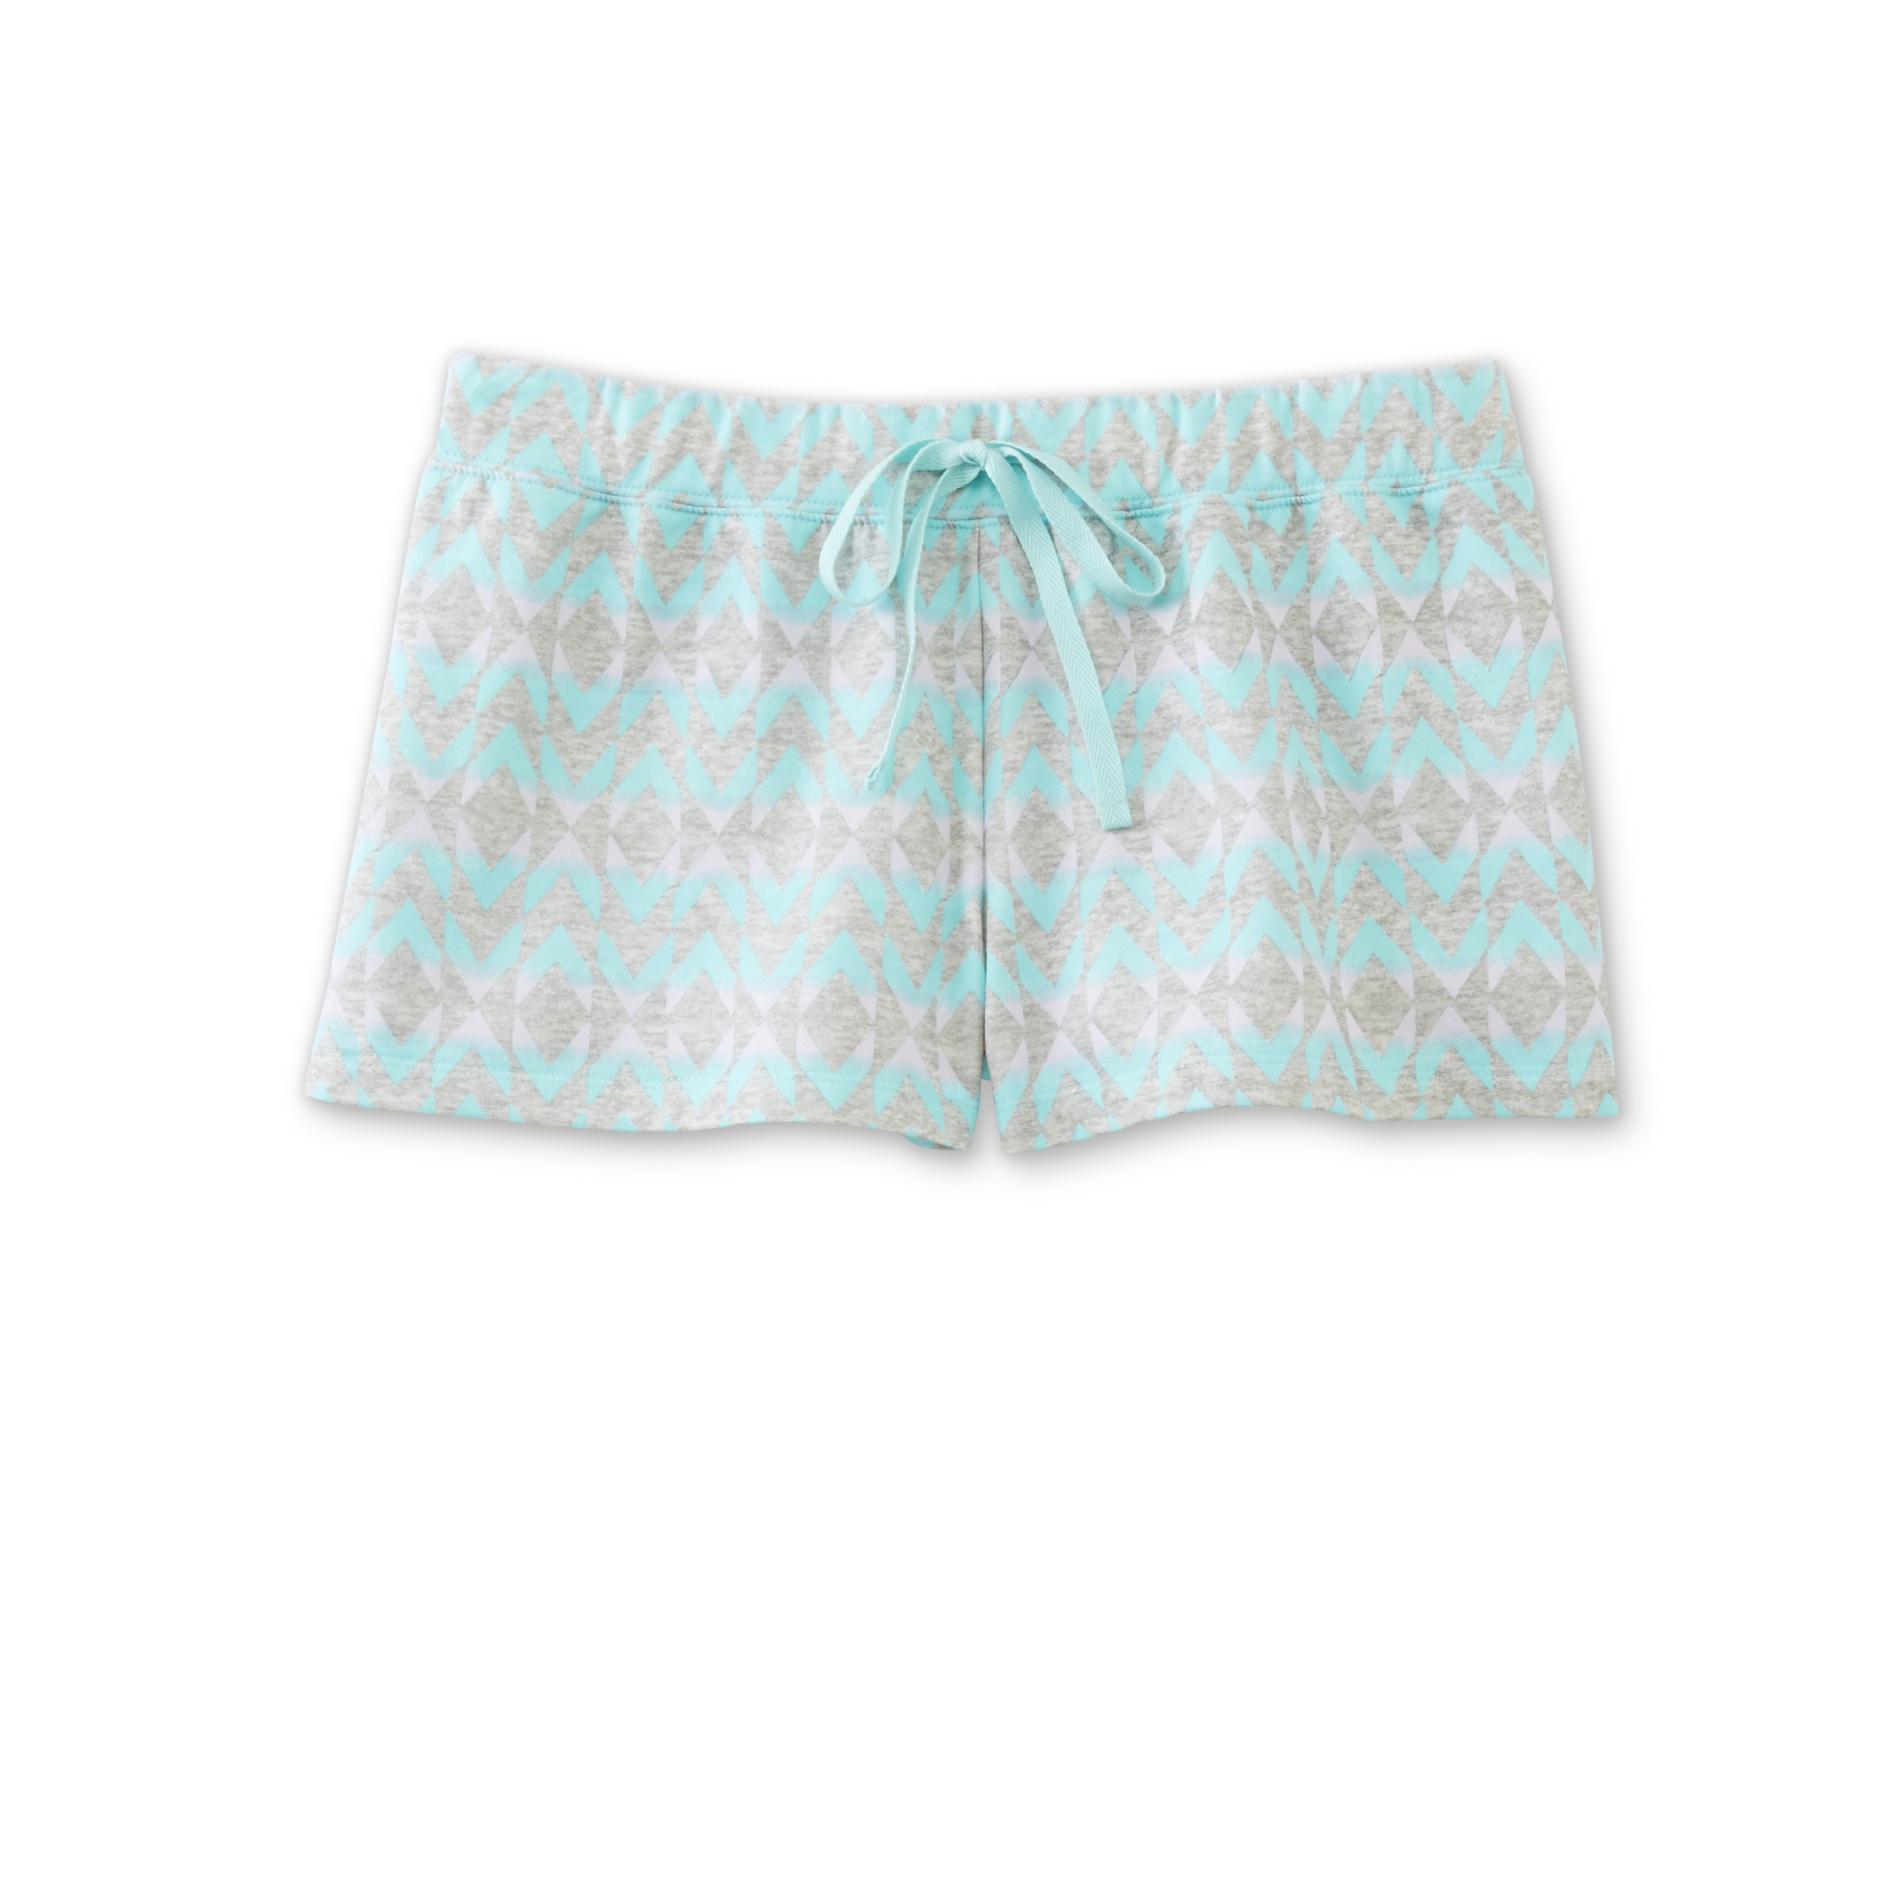 Joe Boxer Women's Knit Pajama Shorts - Ombre Chevron